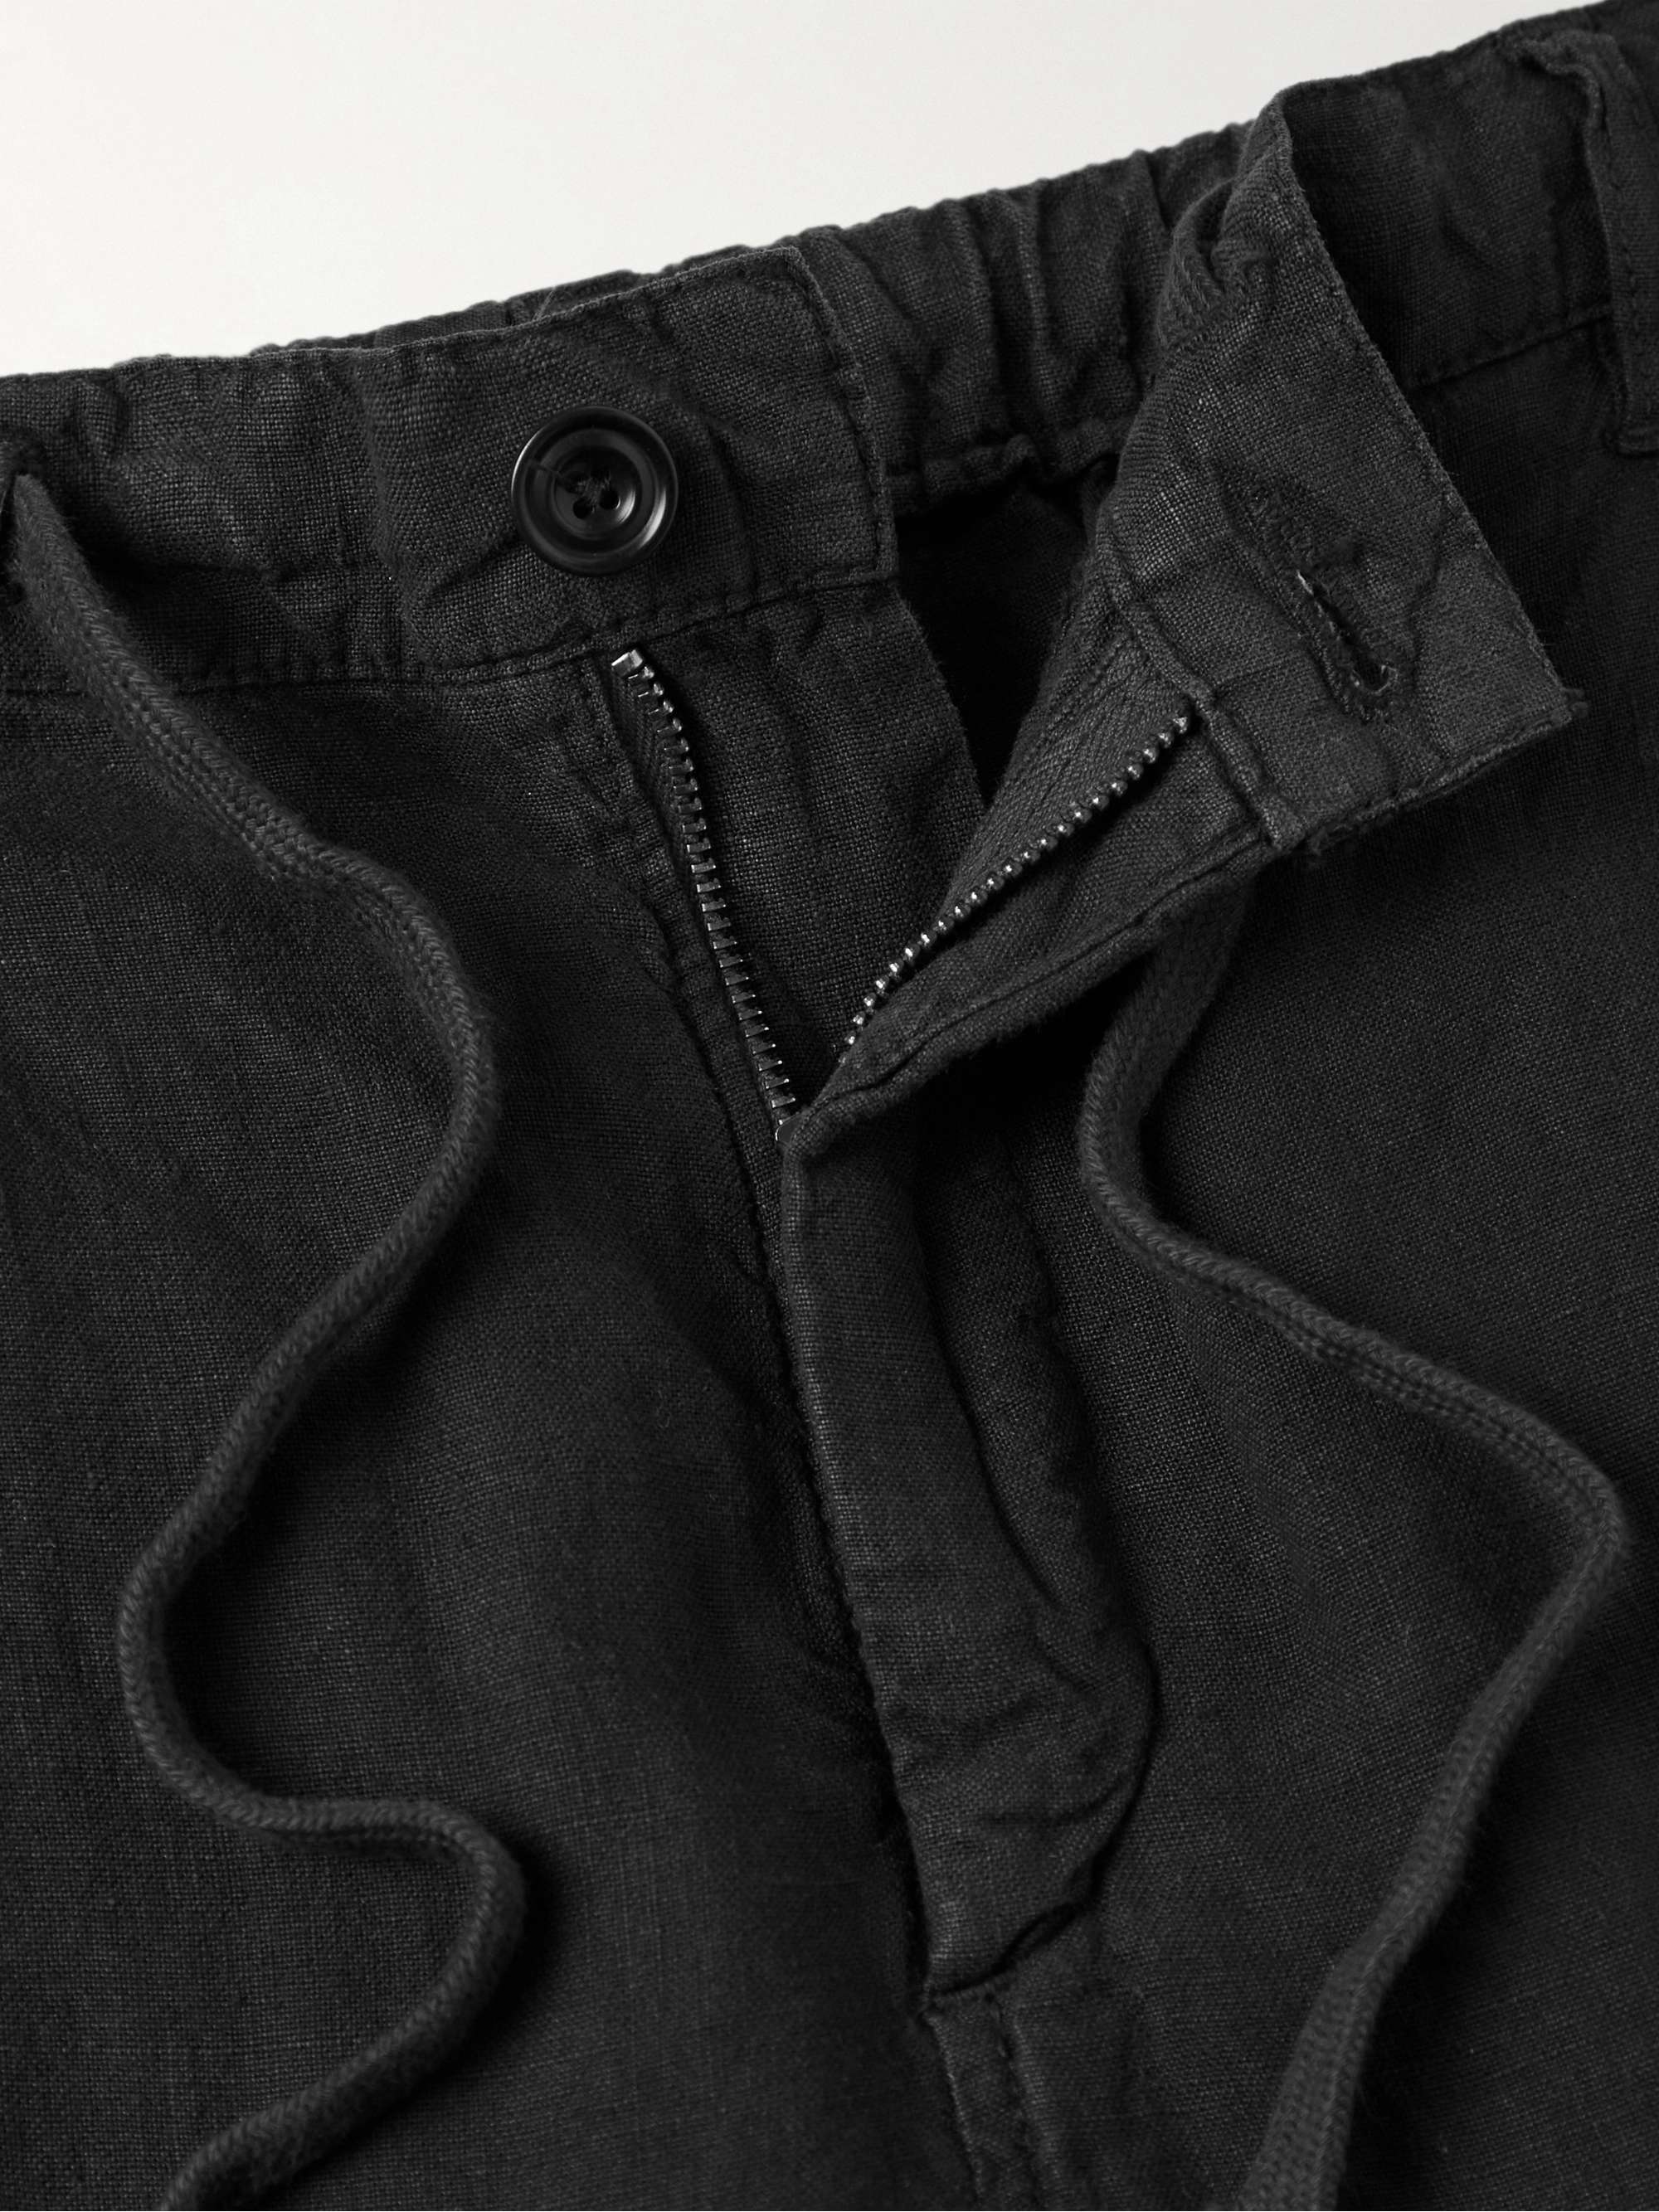 HARTFORD Tanker Slim-Fit Linen Drawstring Trousers